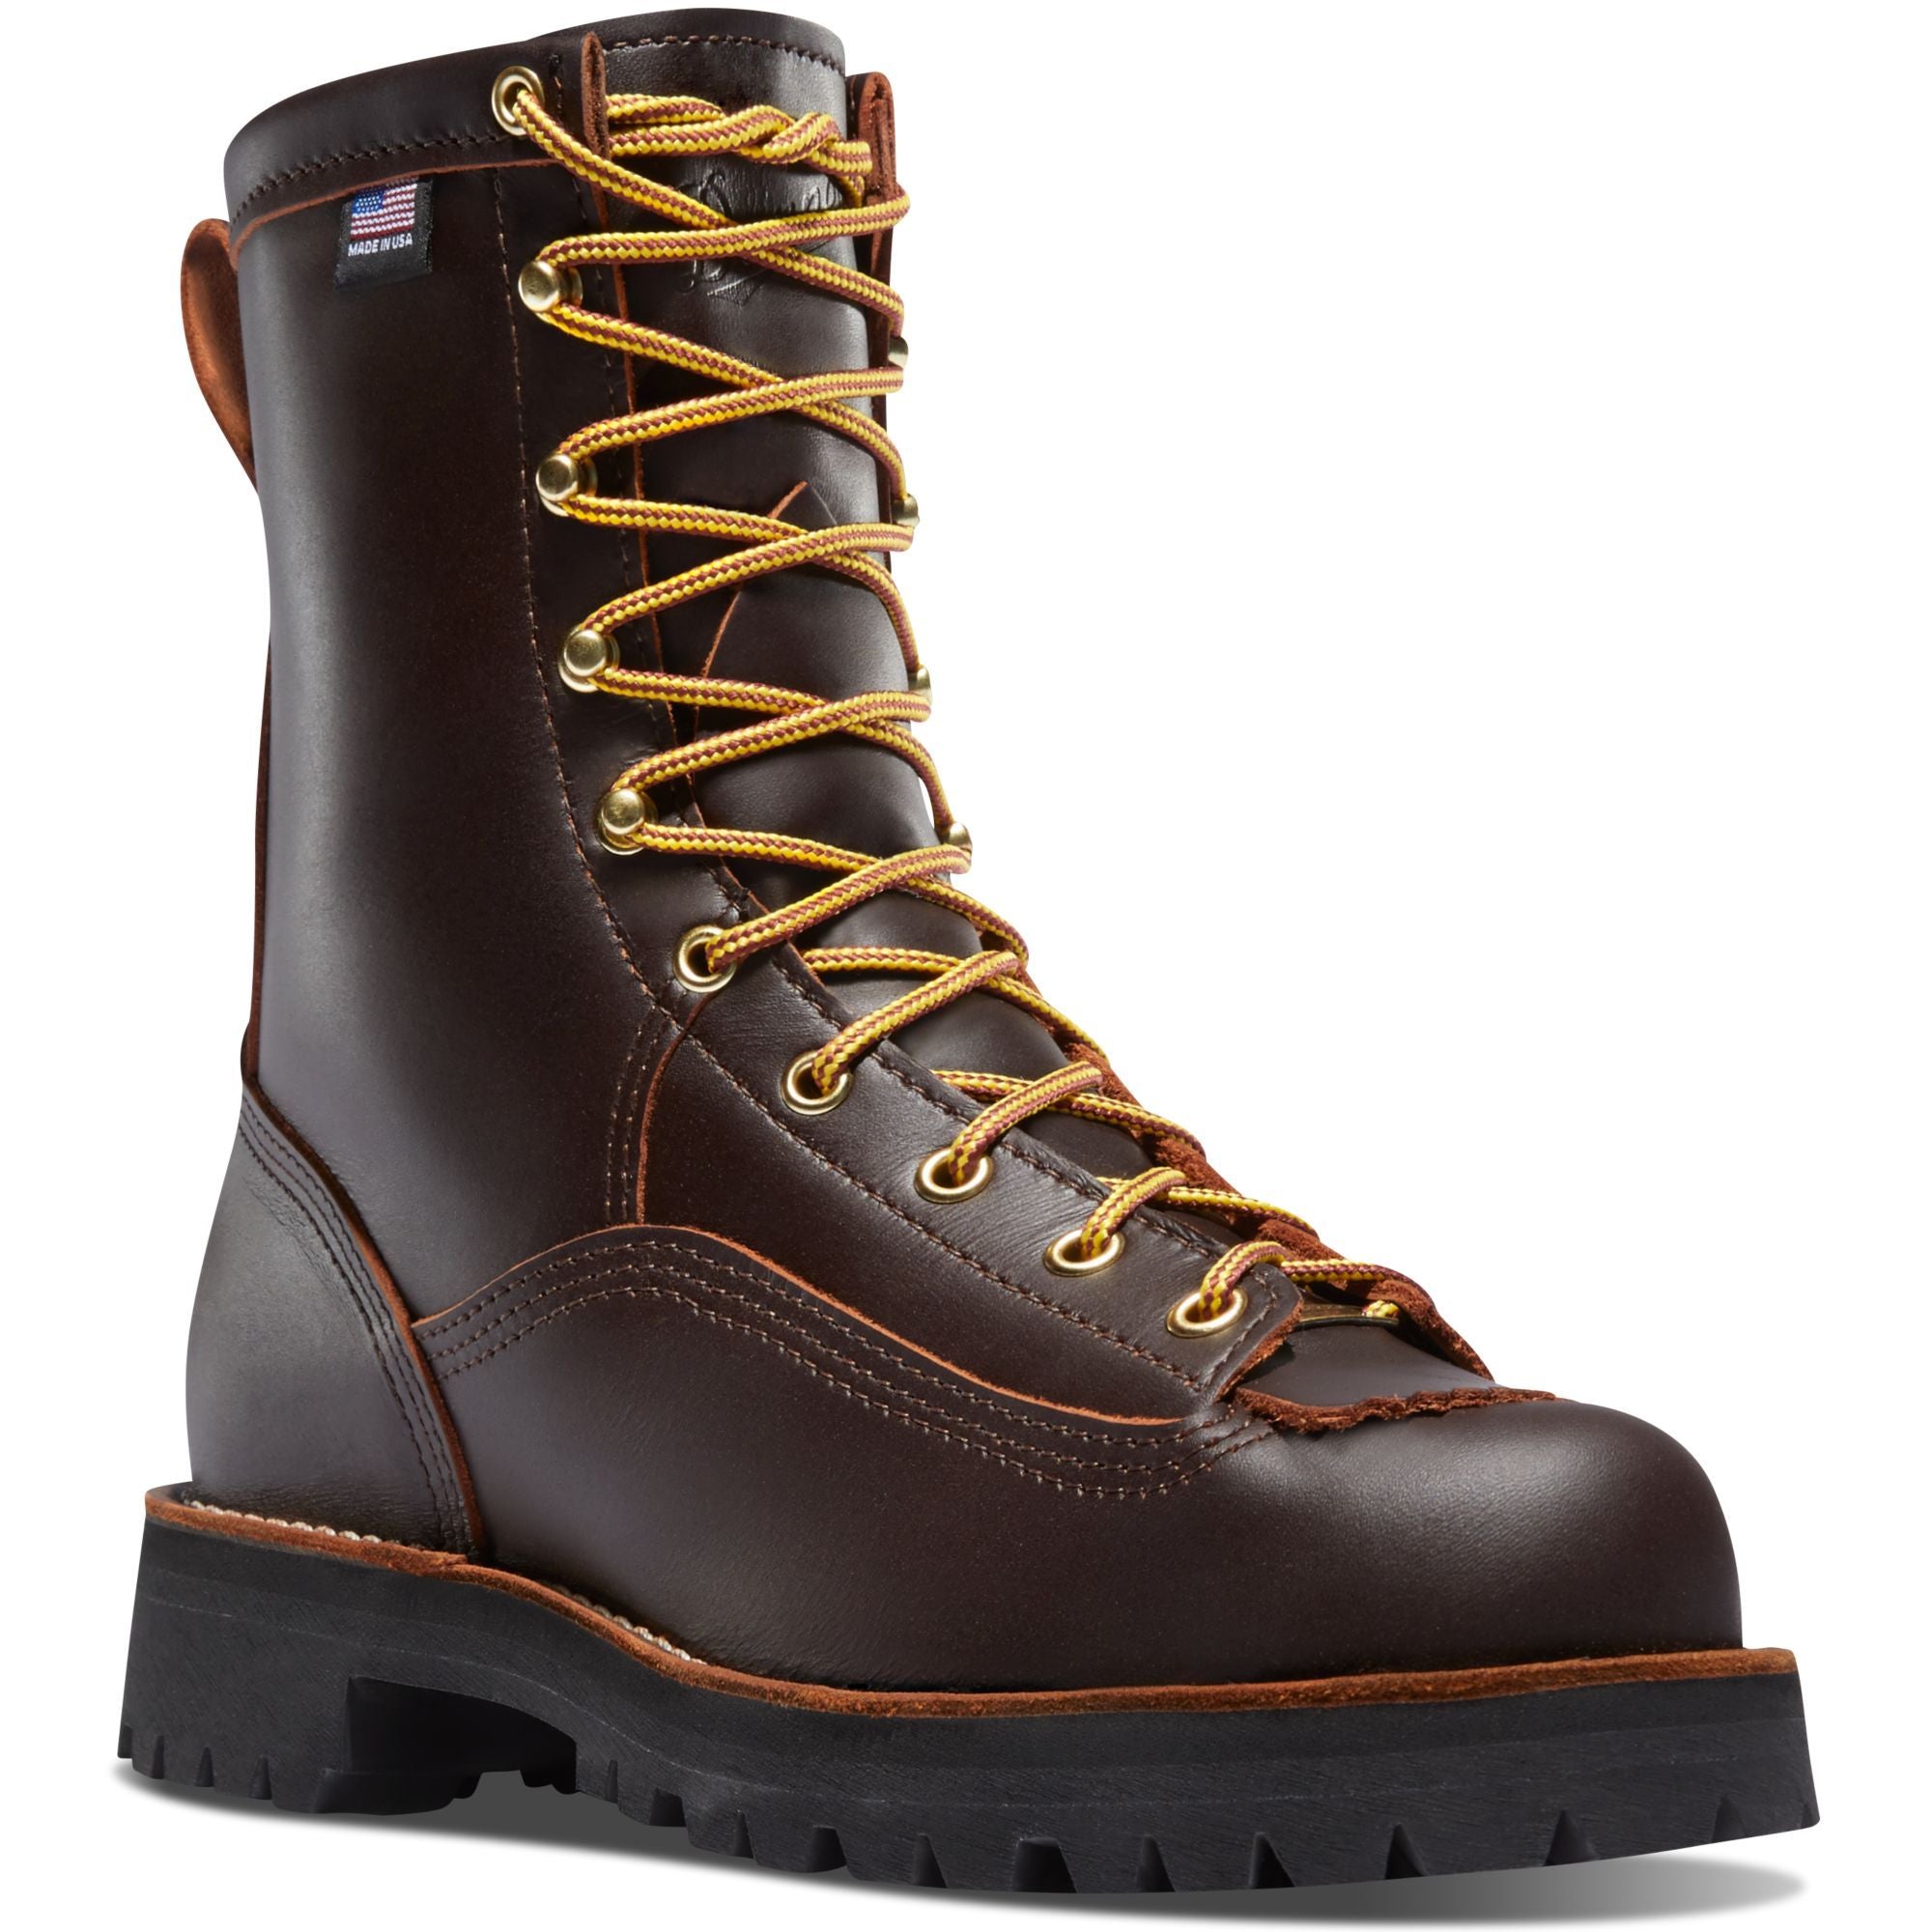 Danner Men's Rain Forest USA Made 8" Soft Toe WP Work Boot Brown 10600 7 / Medium / Brown - Overlook Boots